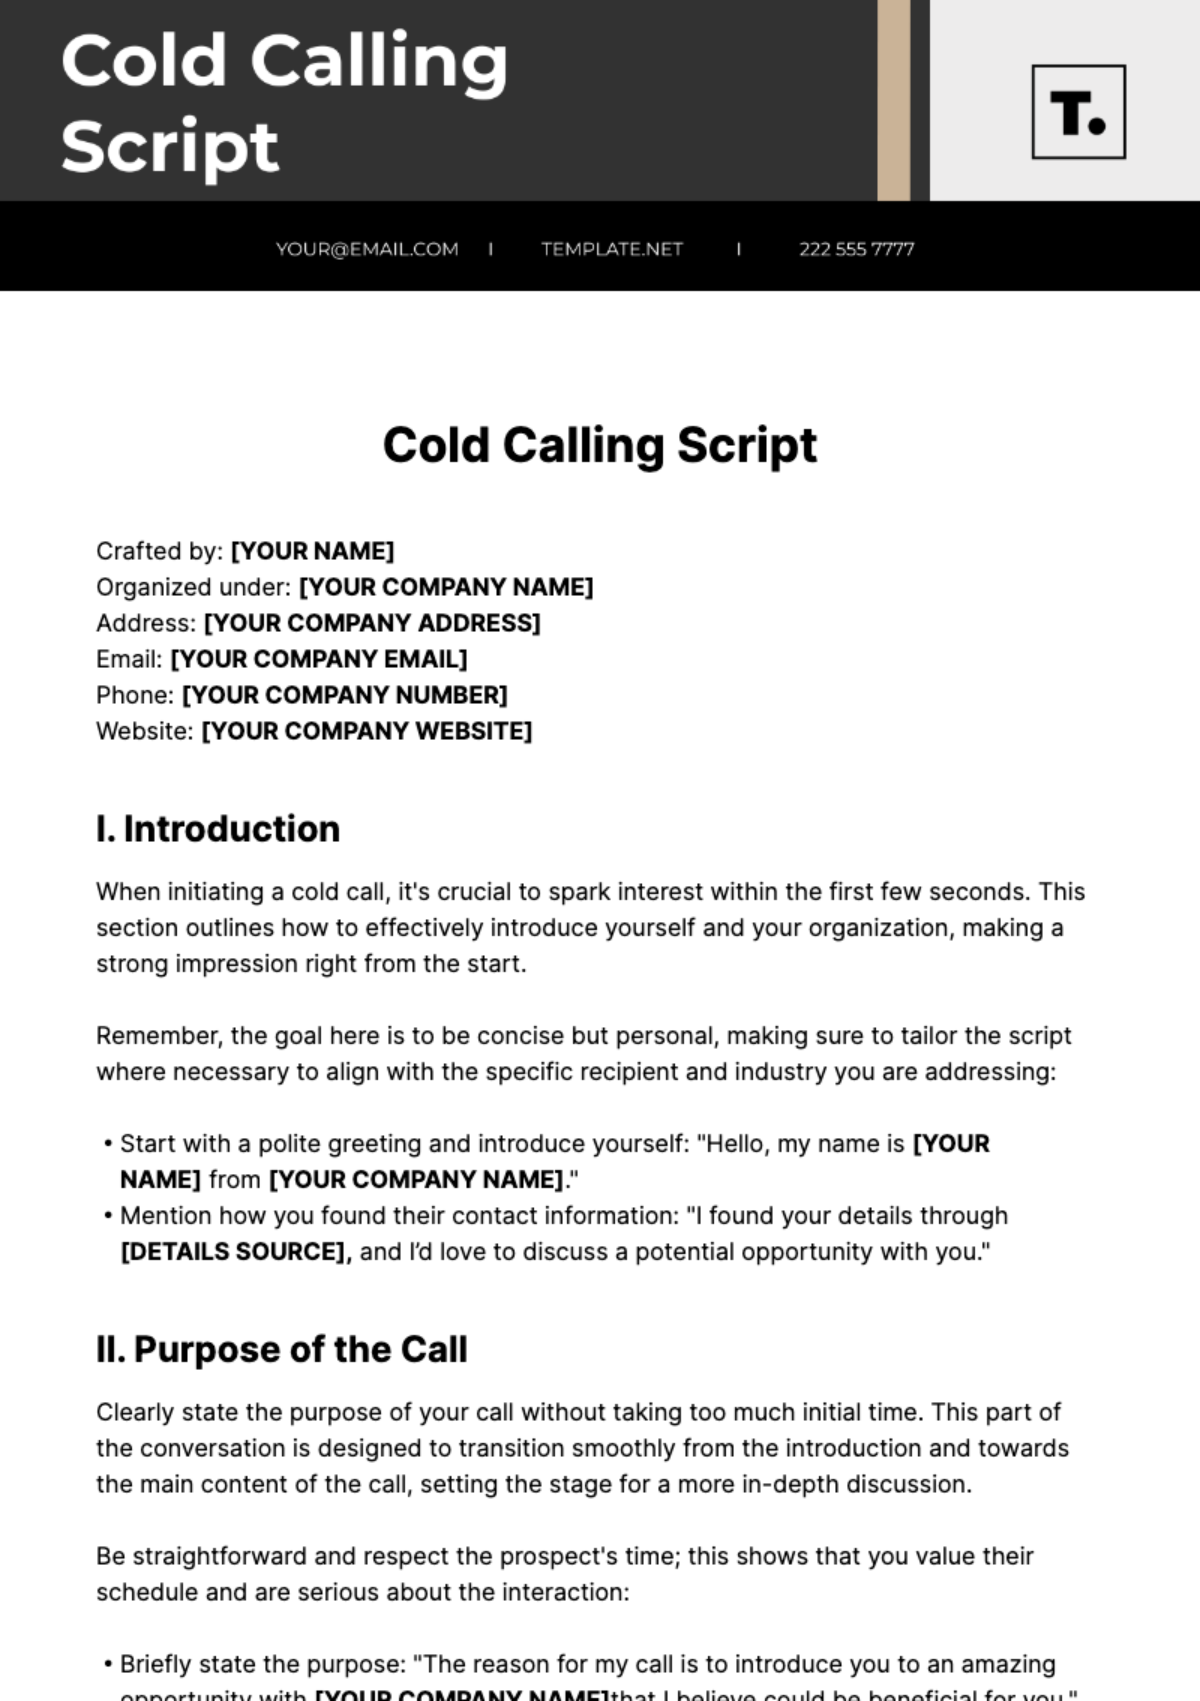 Cold Calling Script Template